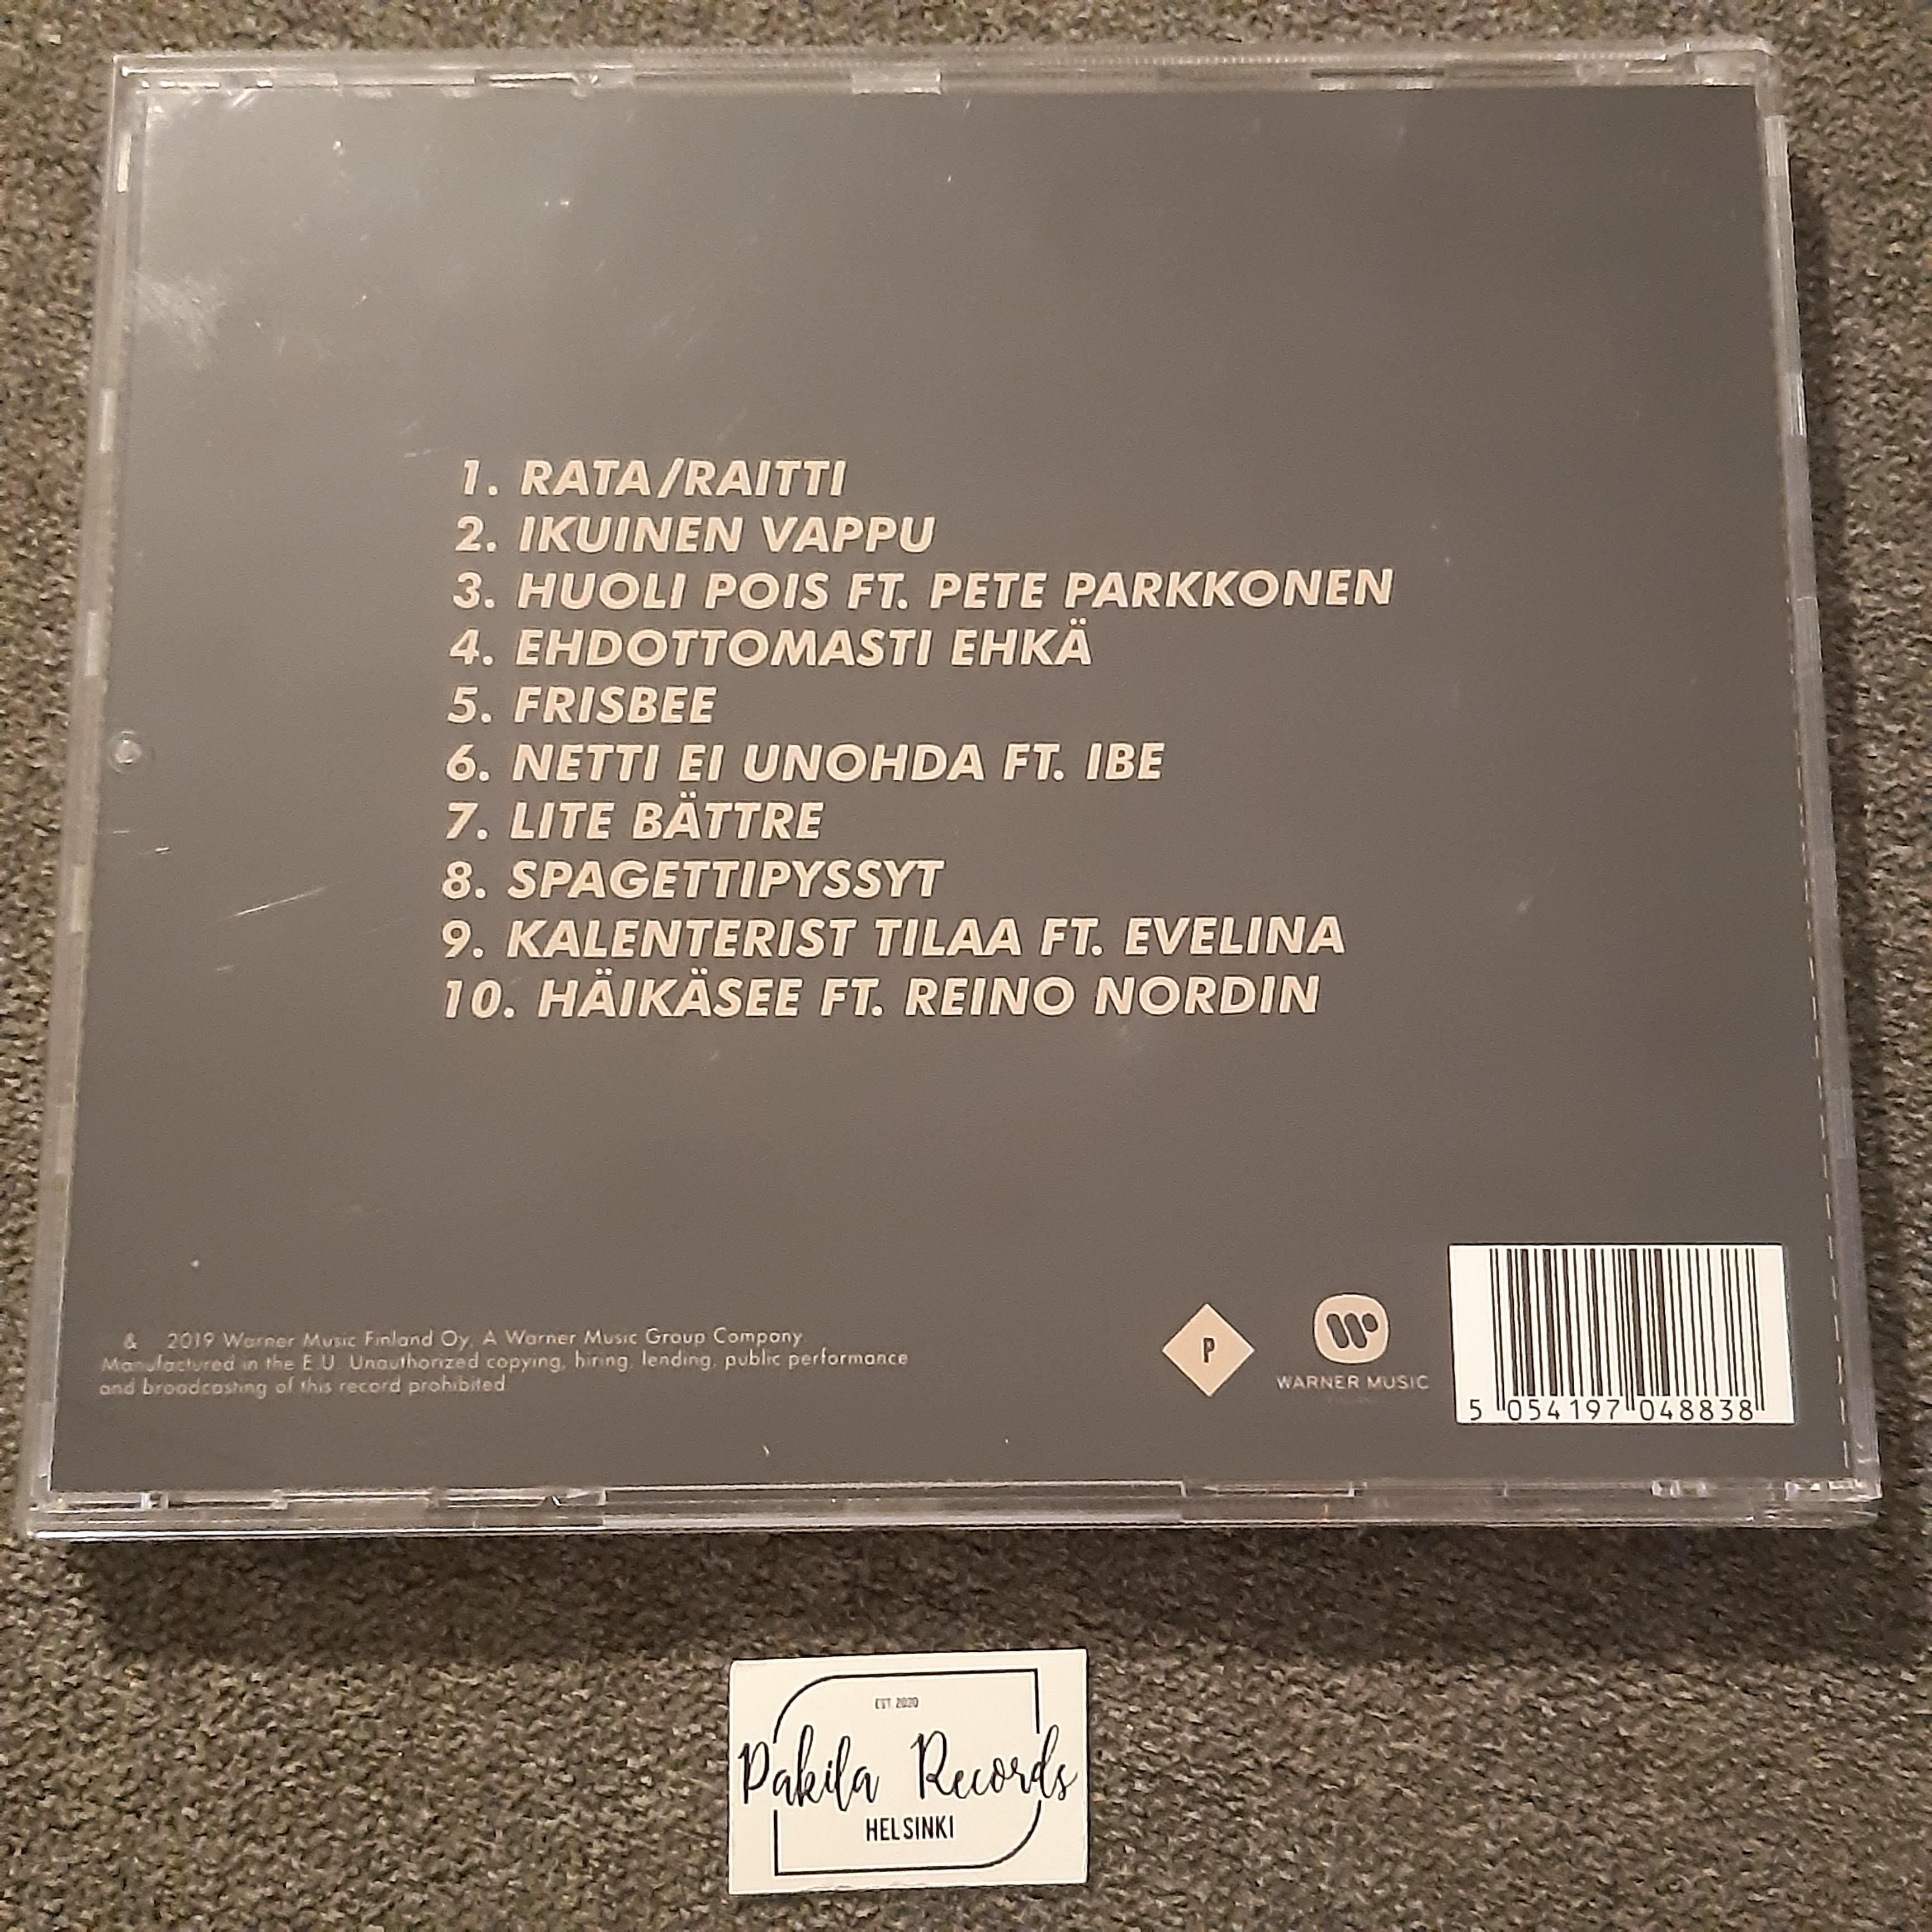 JVG - Rata / Raitti - CD (käytetty)